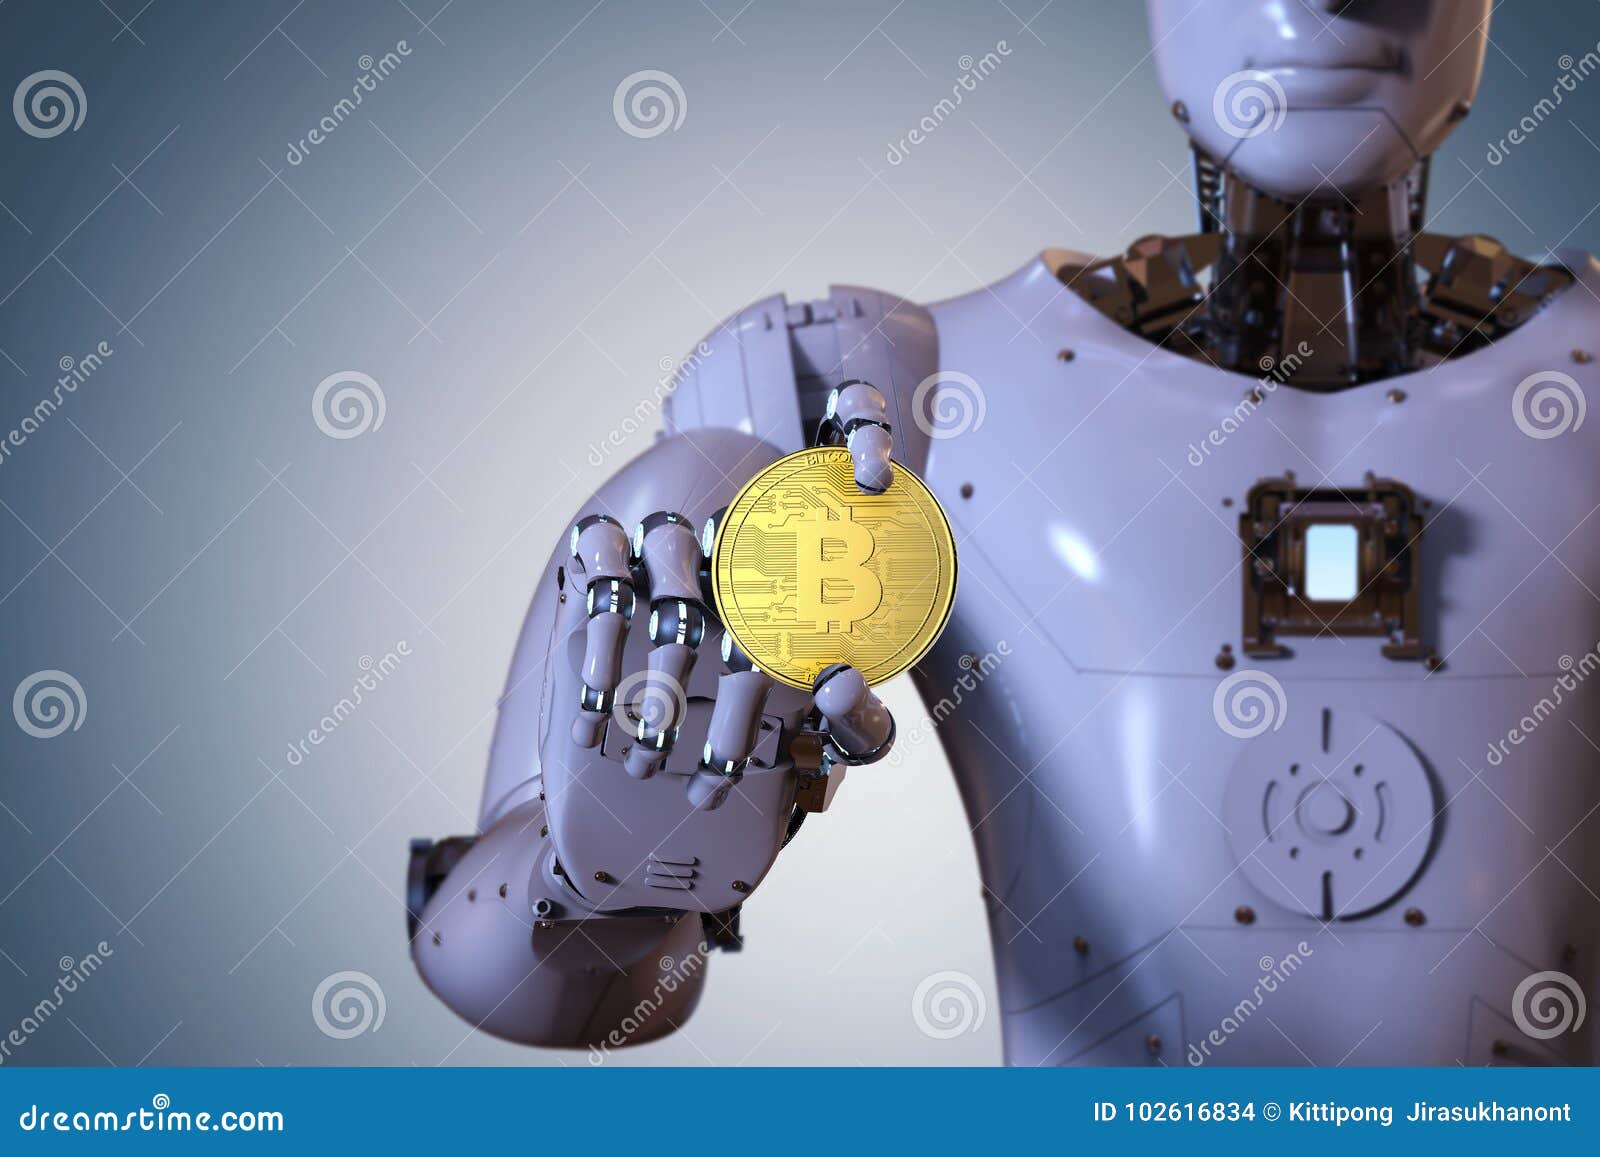 auto robot mineraria bitcoin)